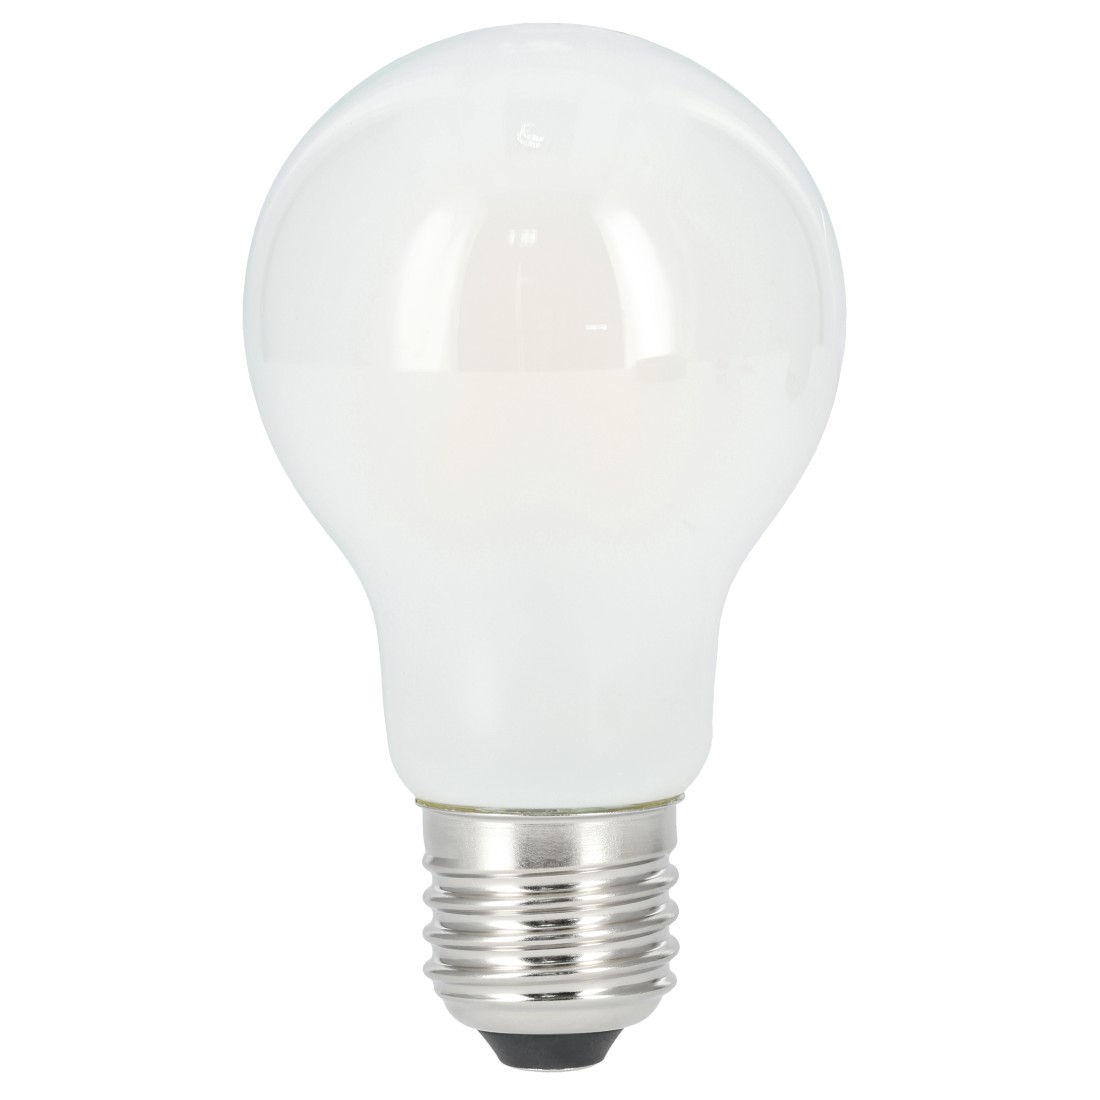 abx High-Res Image - Xavax, Ampoule filament LED, E27, 1521lm remp. 100W, amp. incan., mate, blc chd